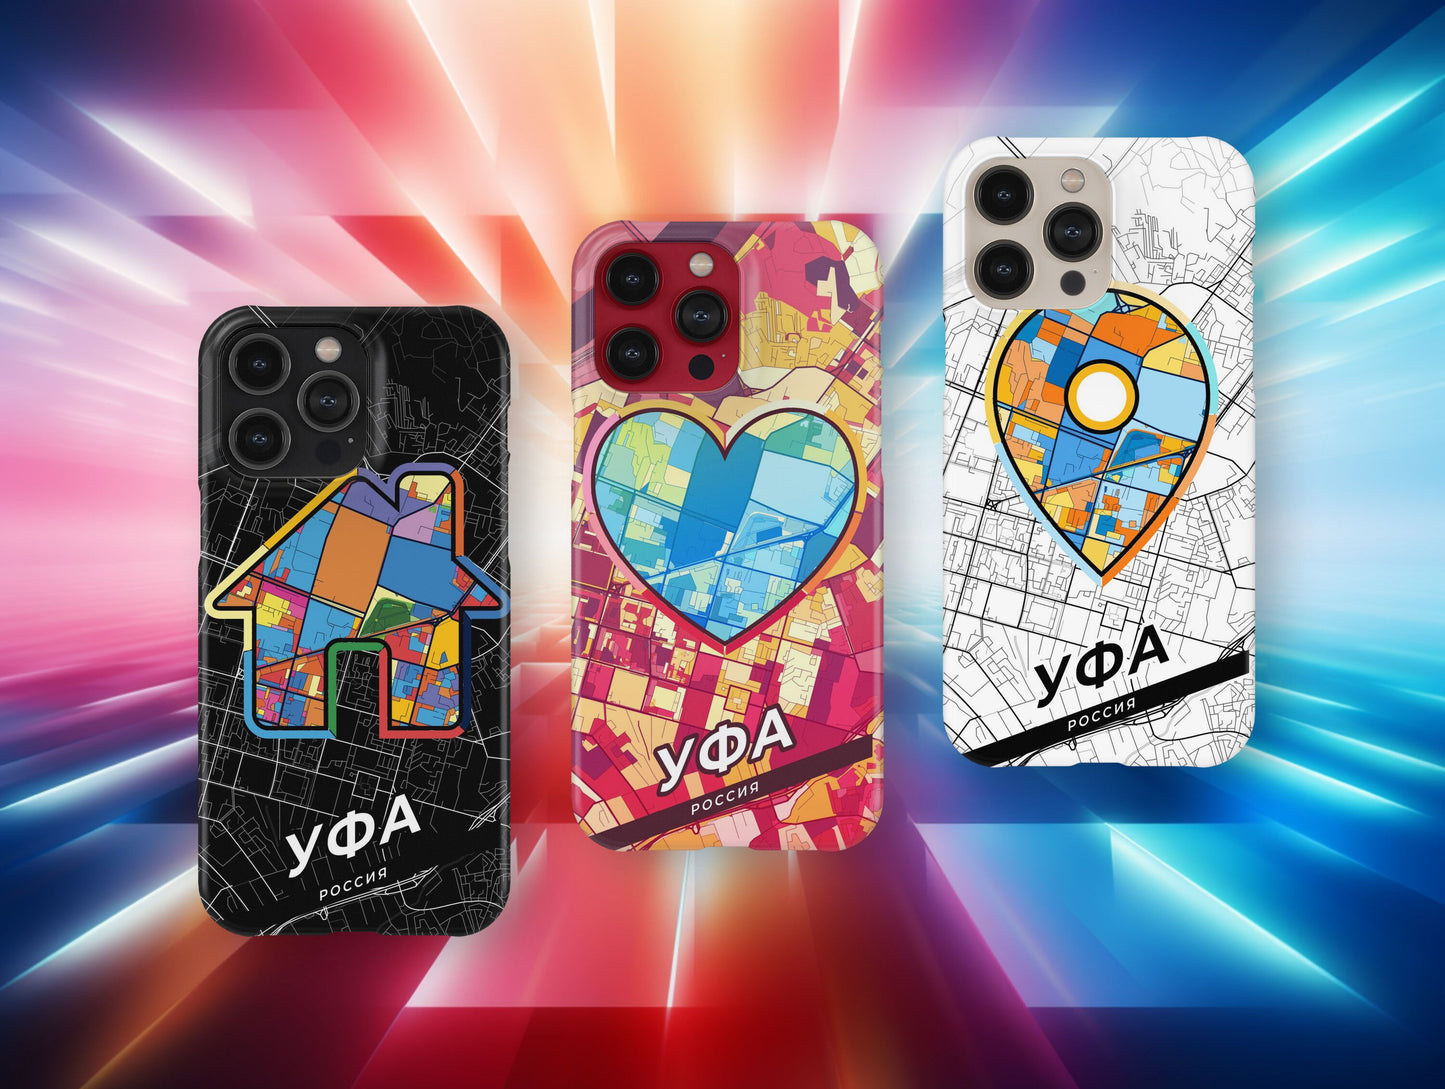 Ufa Russia slim phone case with colorful icon